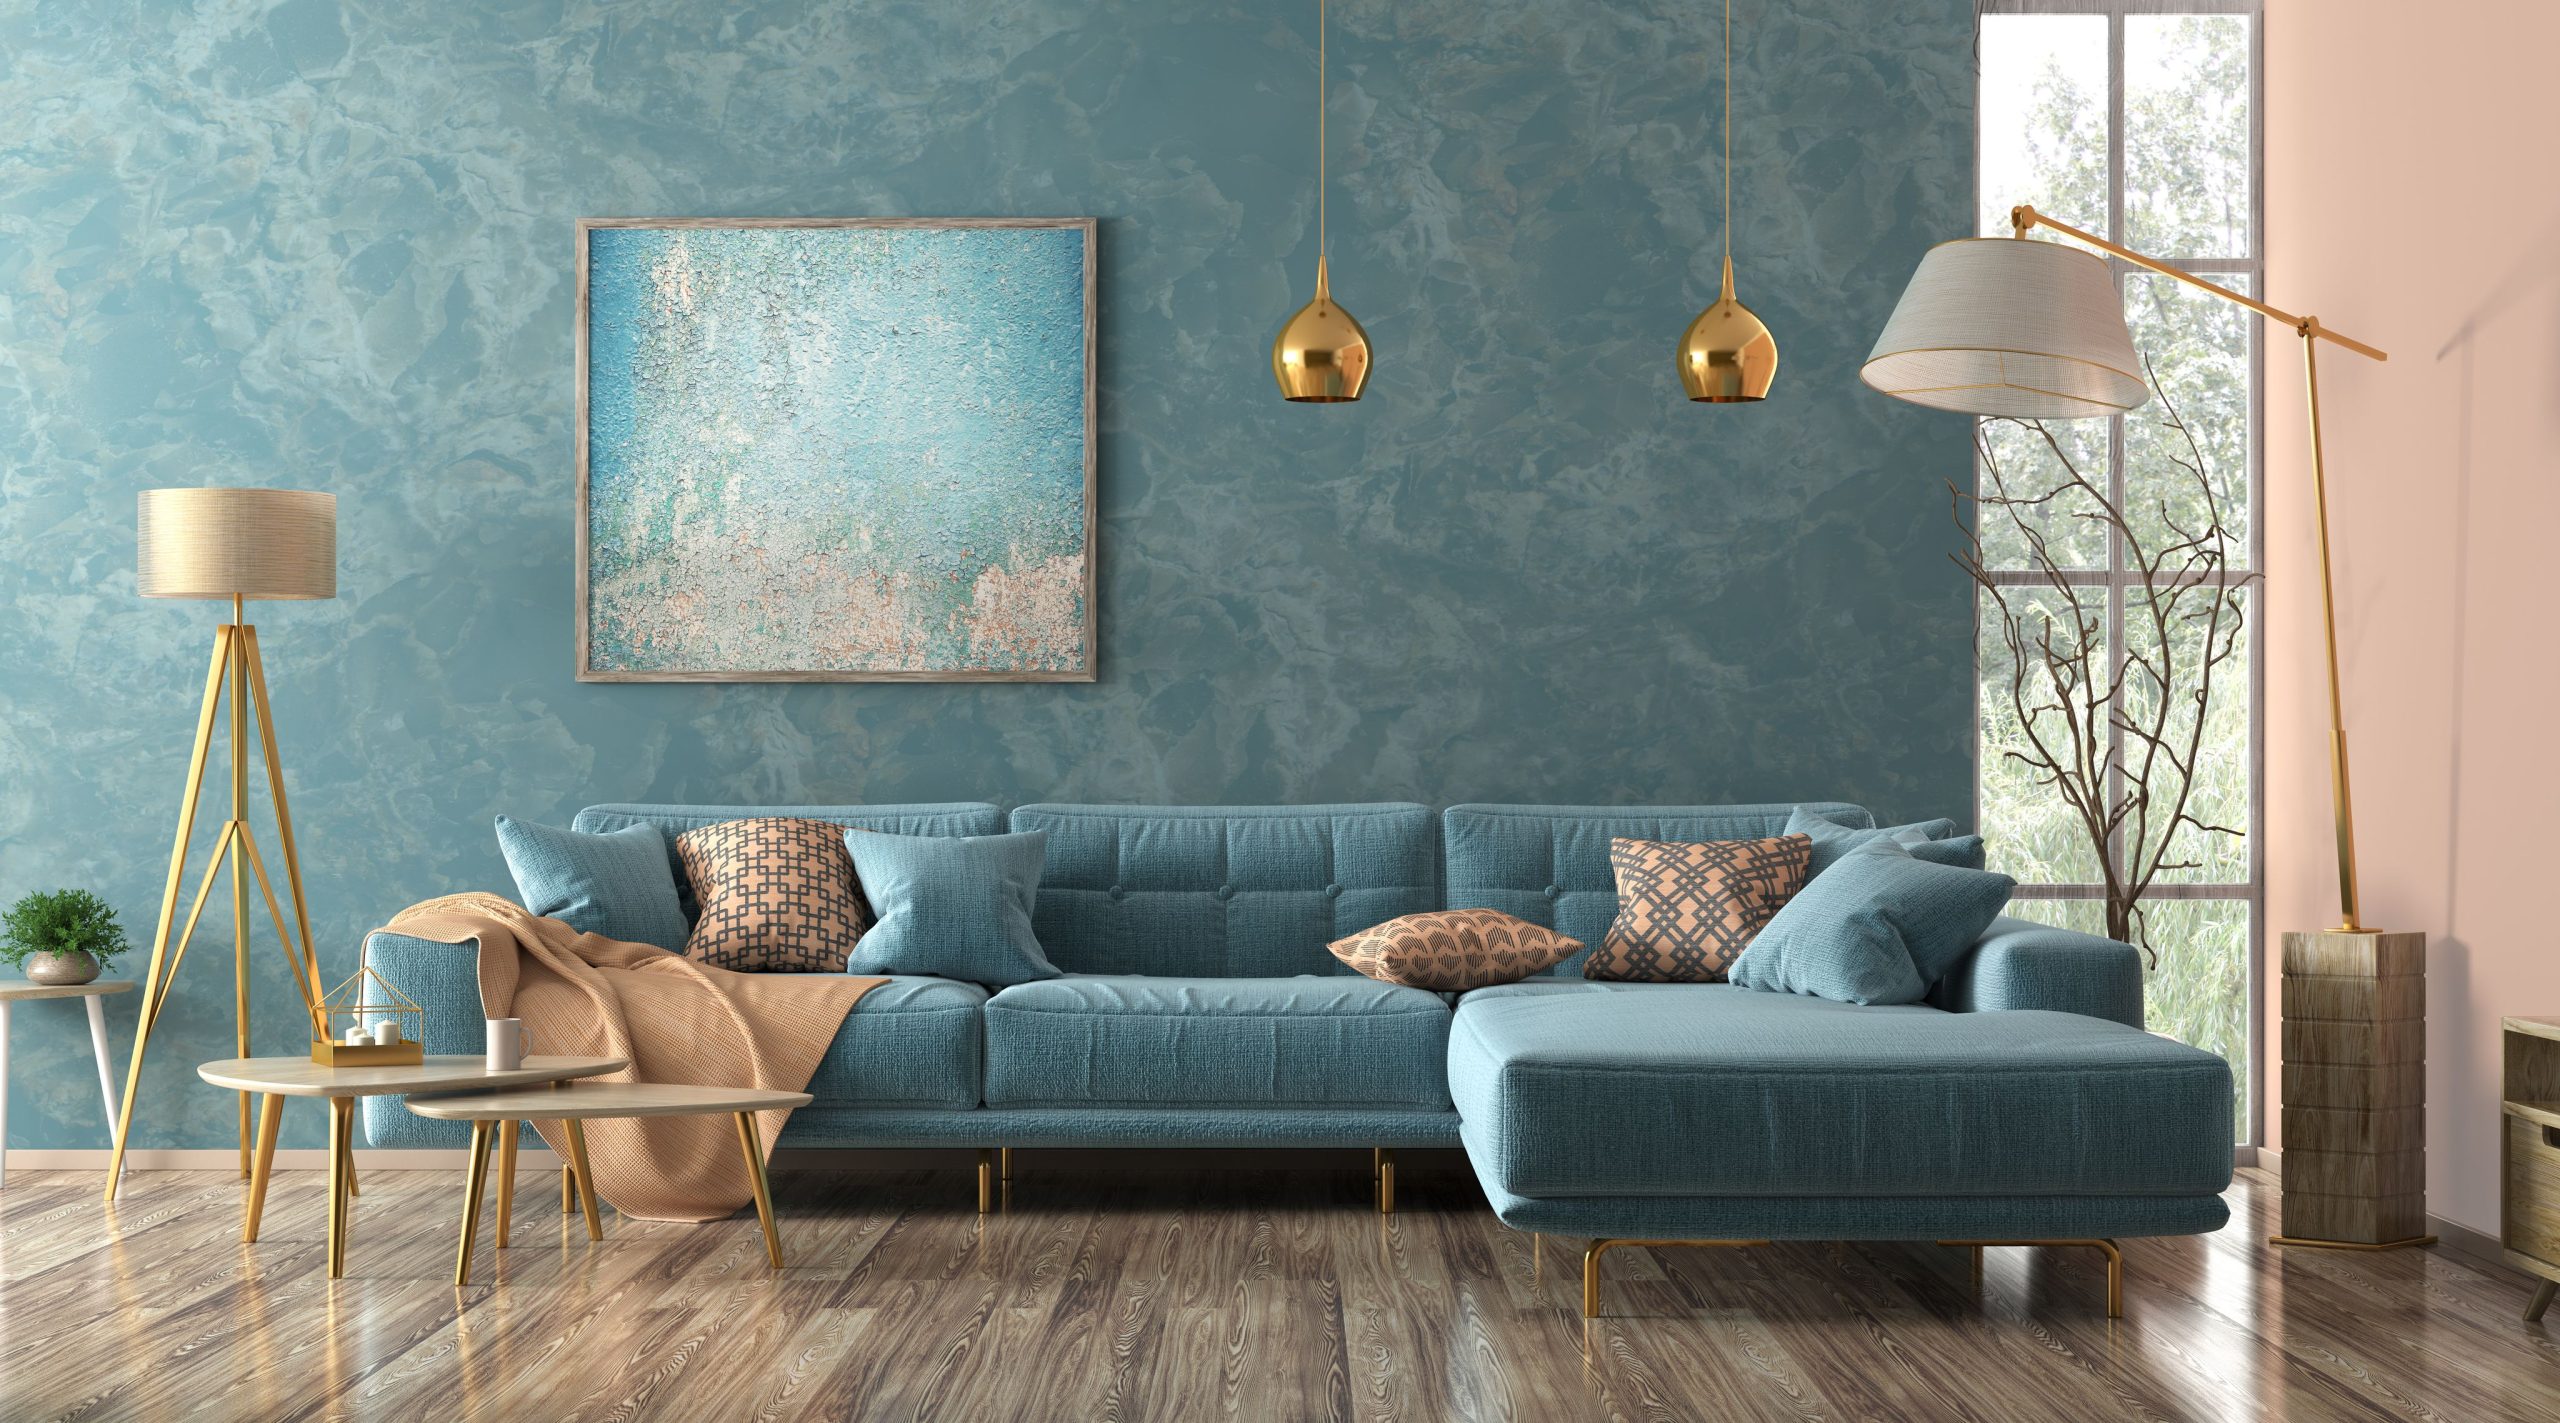 This latest corner sofa design leaves a lasting impression